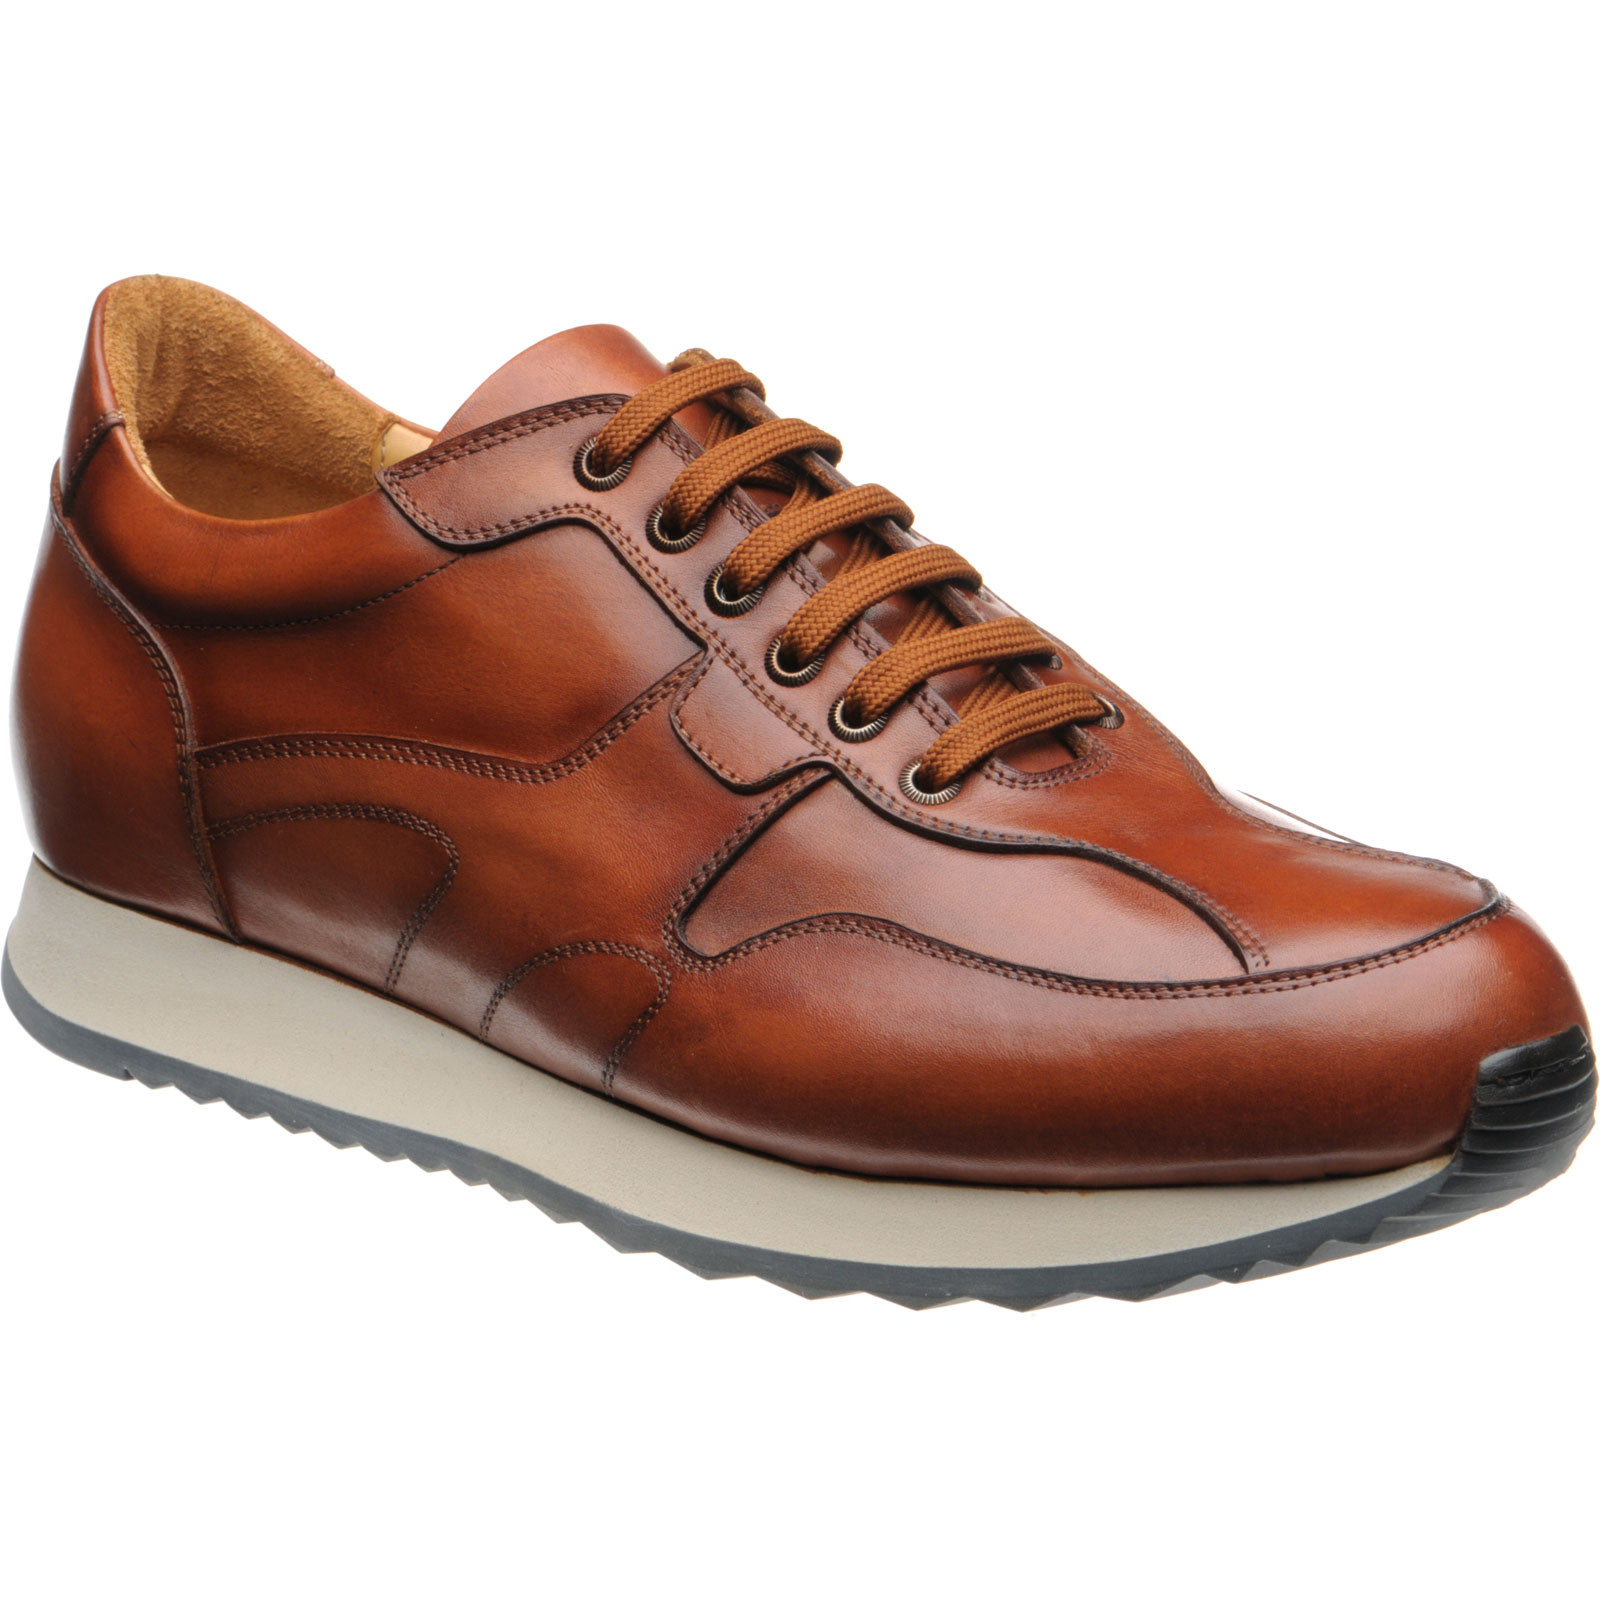 Herring shoes | Herring Trainers | Goodwood in Tan Calf at Herring Shoes